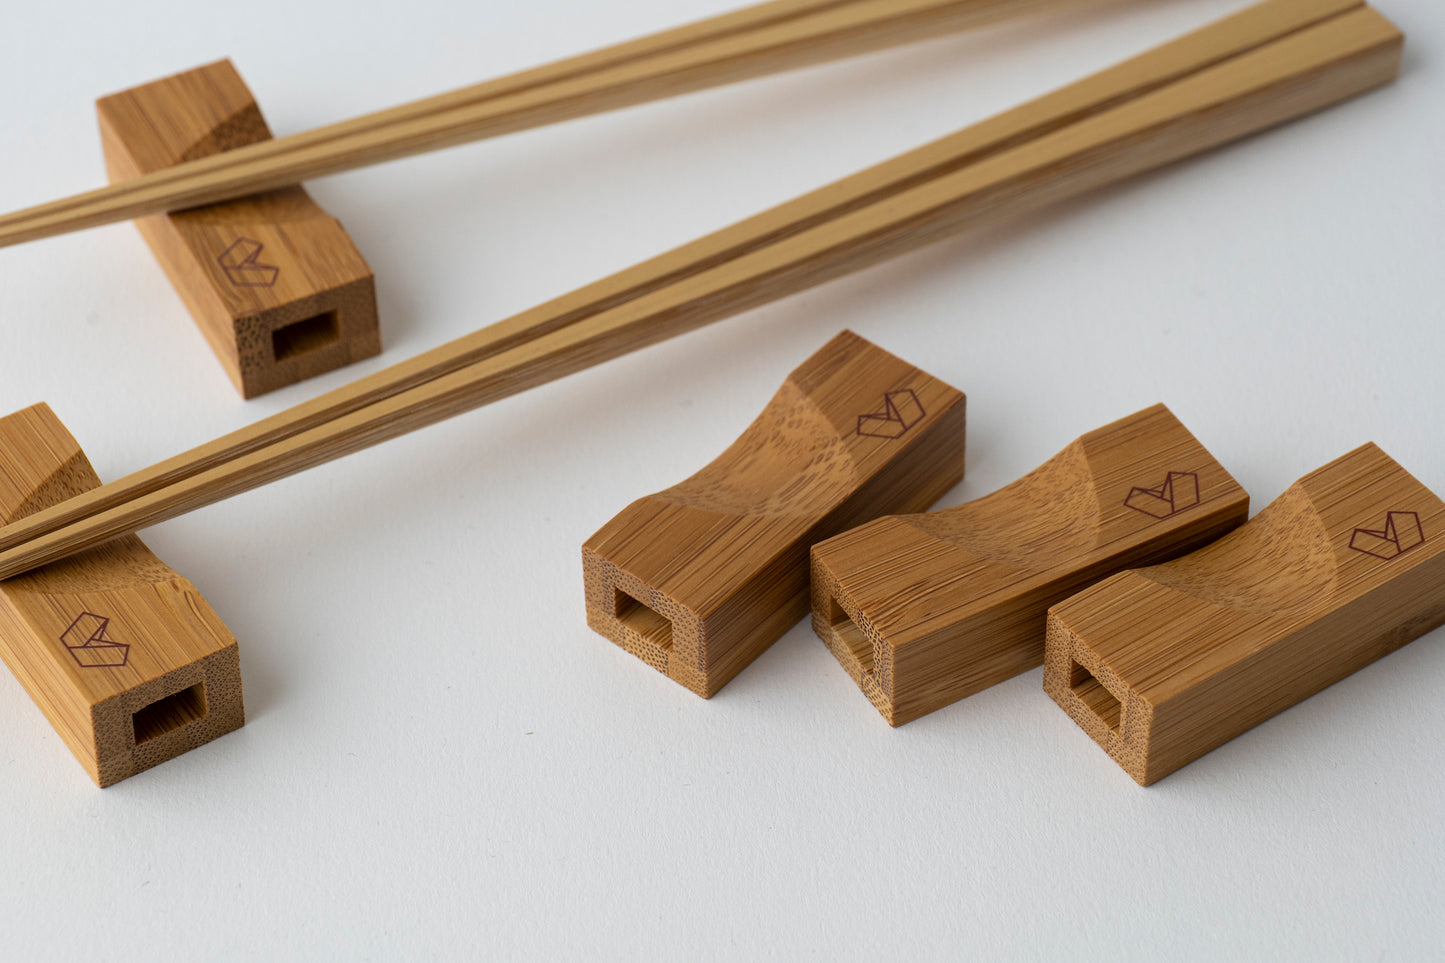 Kimono Mom Donabe (Small) & 2 pairs of Bamboo Chopsticks & Chopstick Rest (5pcs) Set